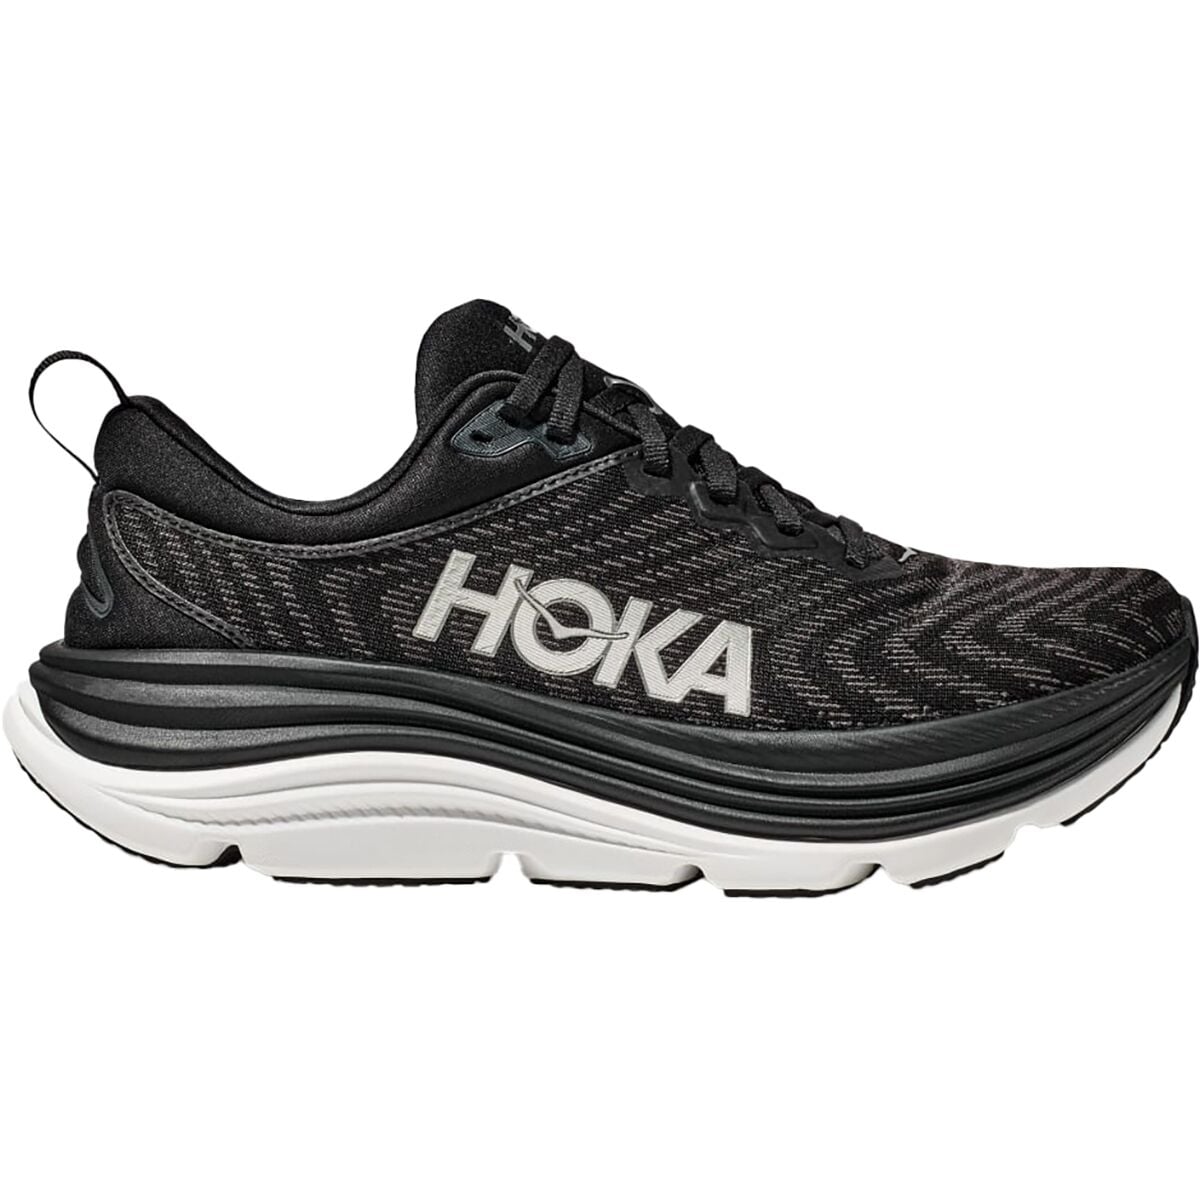 HOKA Gaviota 5 Shoe - Women's